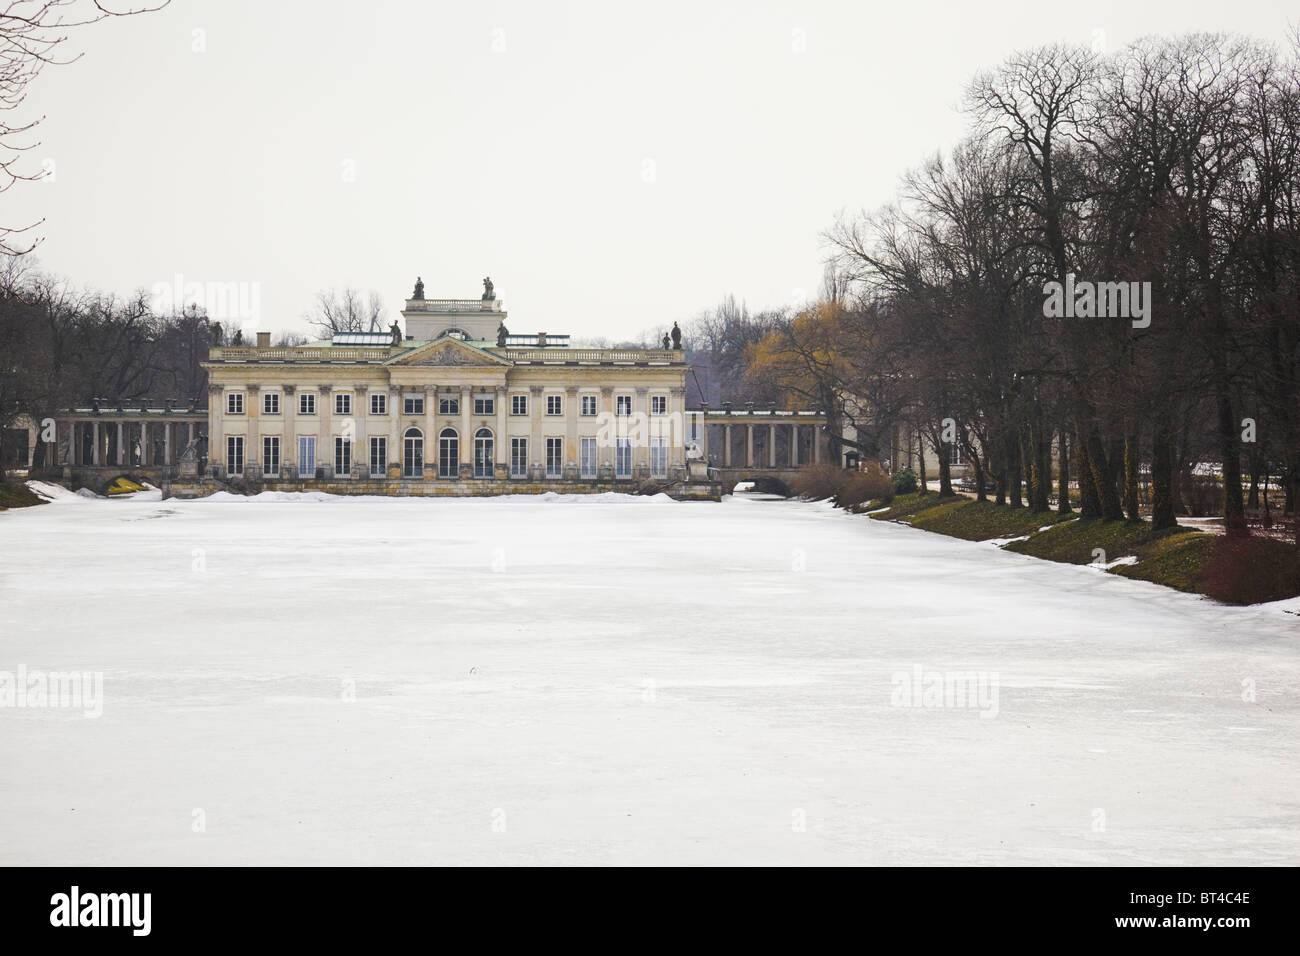 Łazienki Palace in Royal Baths Park (Warsaw, Poland) Stock Photo